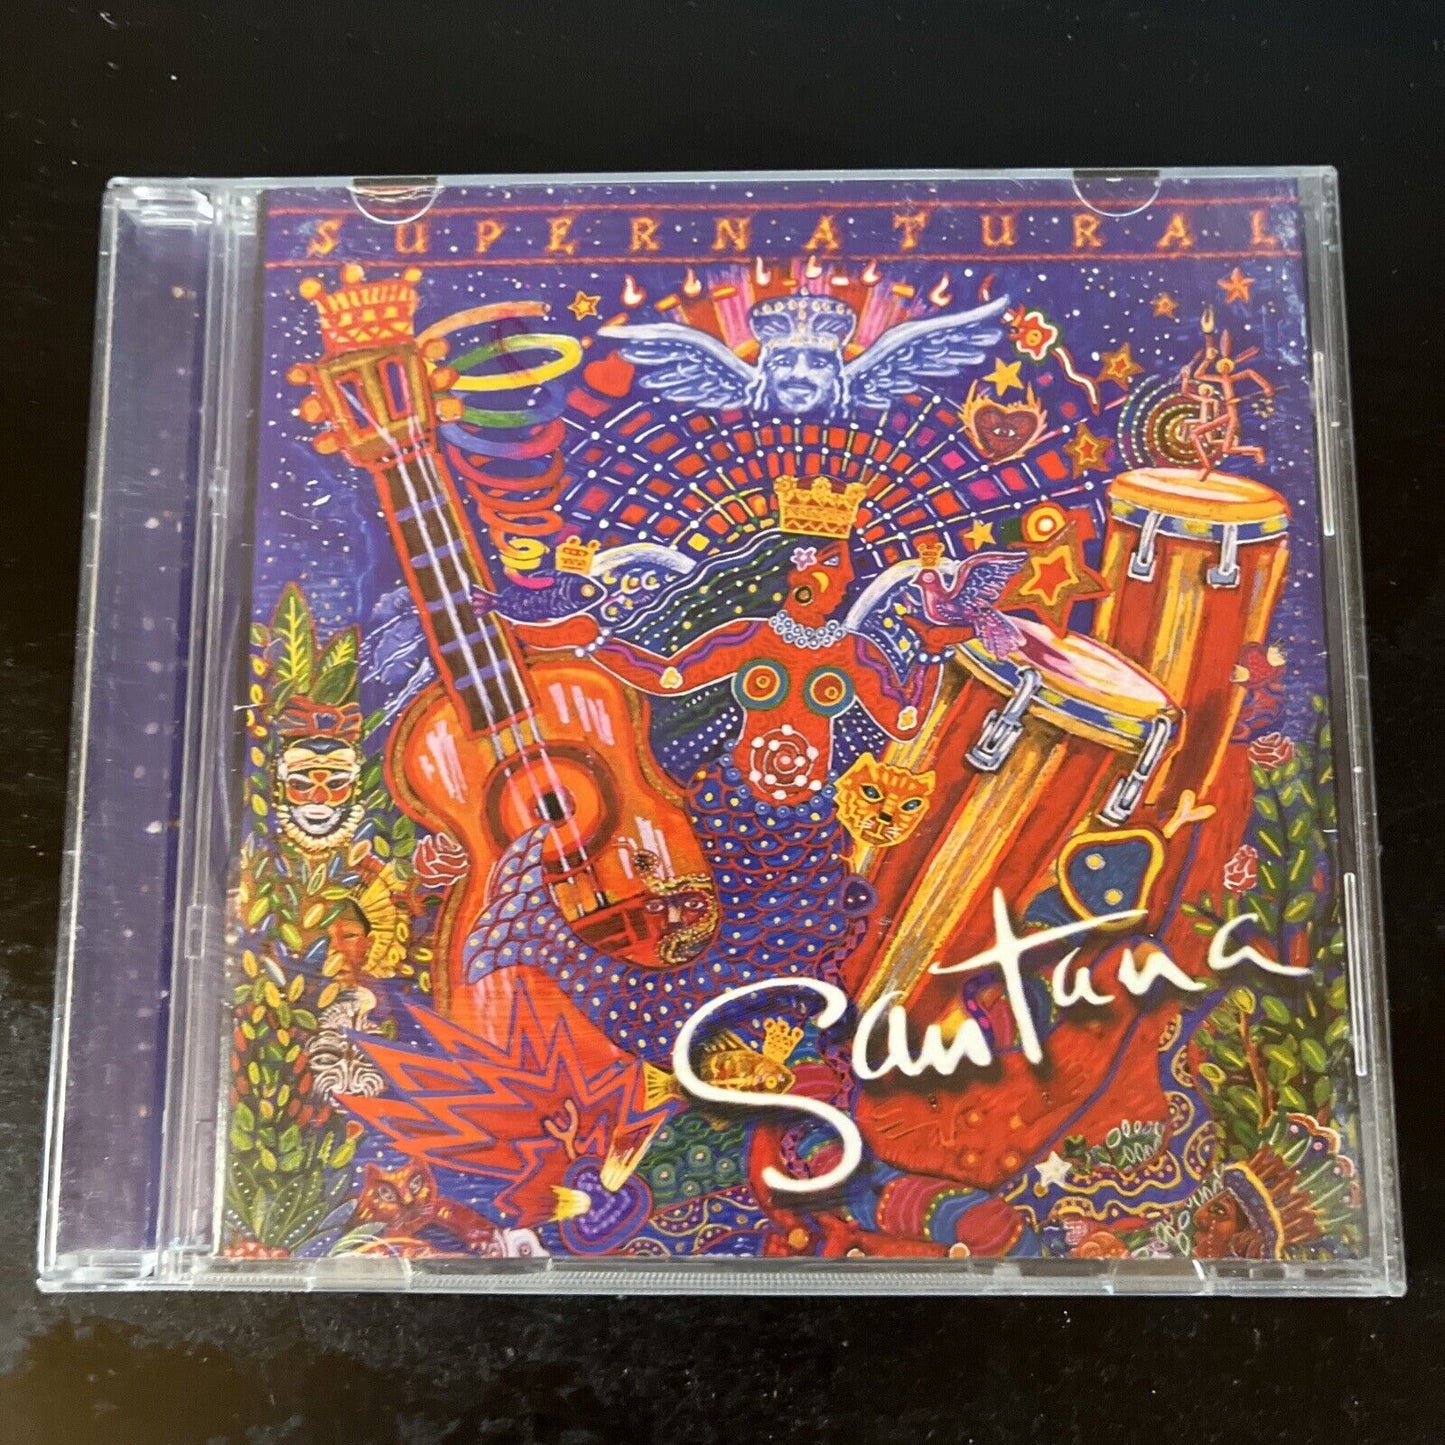 Santana - Supernatural (CD, 1999) 07822-19080-2